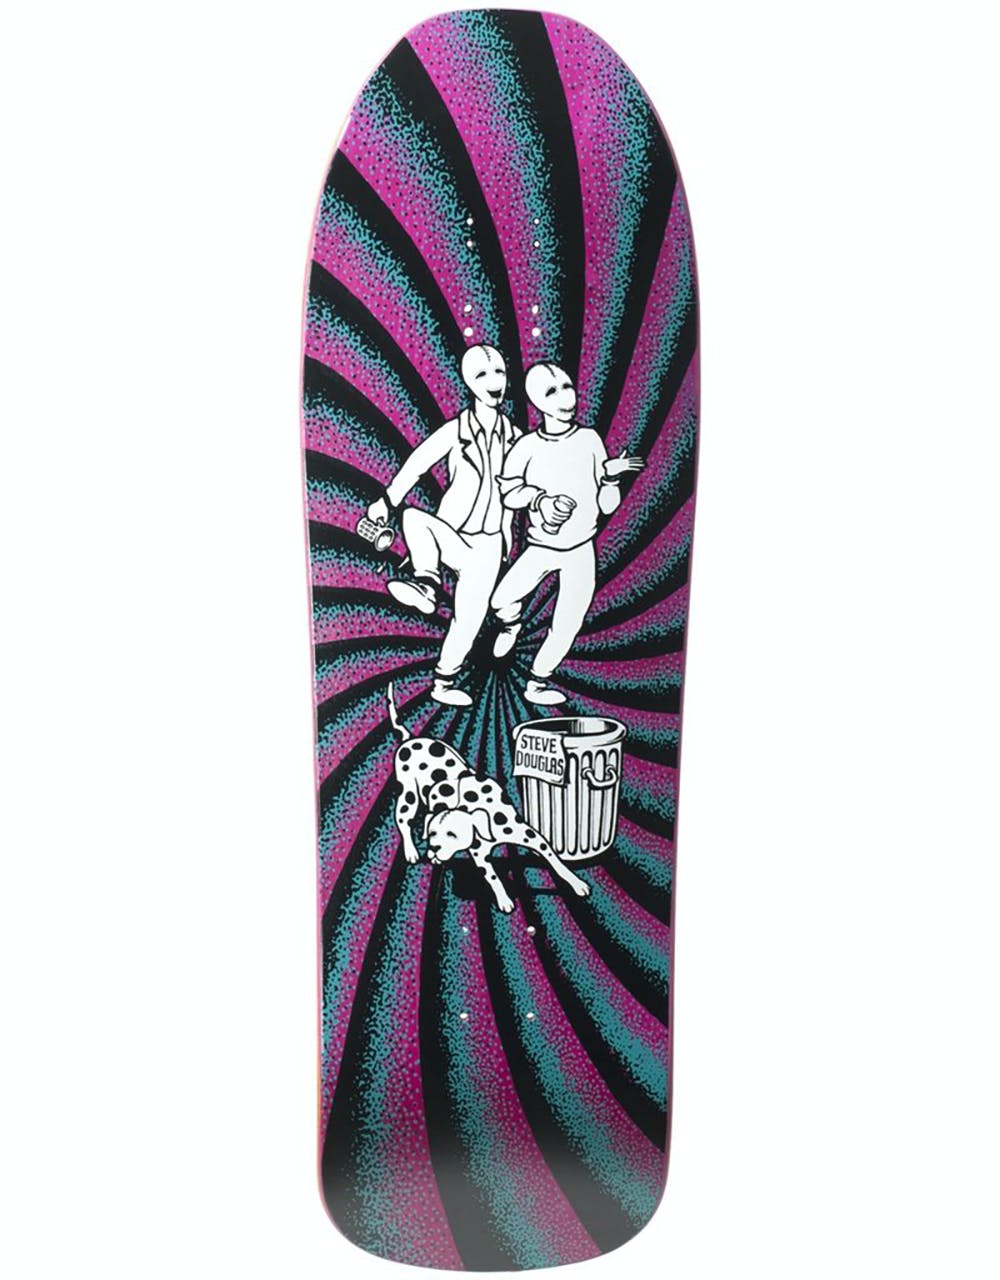 The New Deal Douglas Chums SP Skateboard Deck - 9.75"